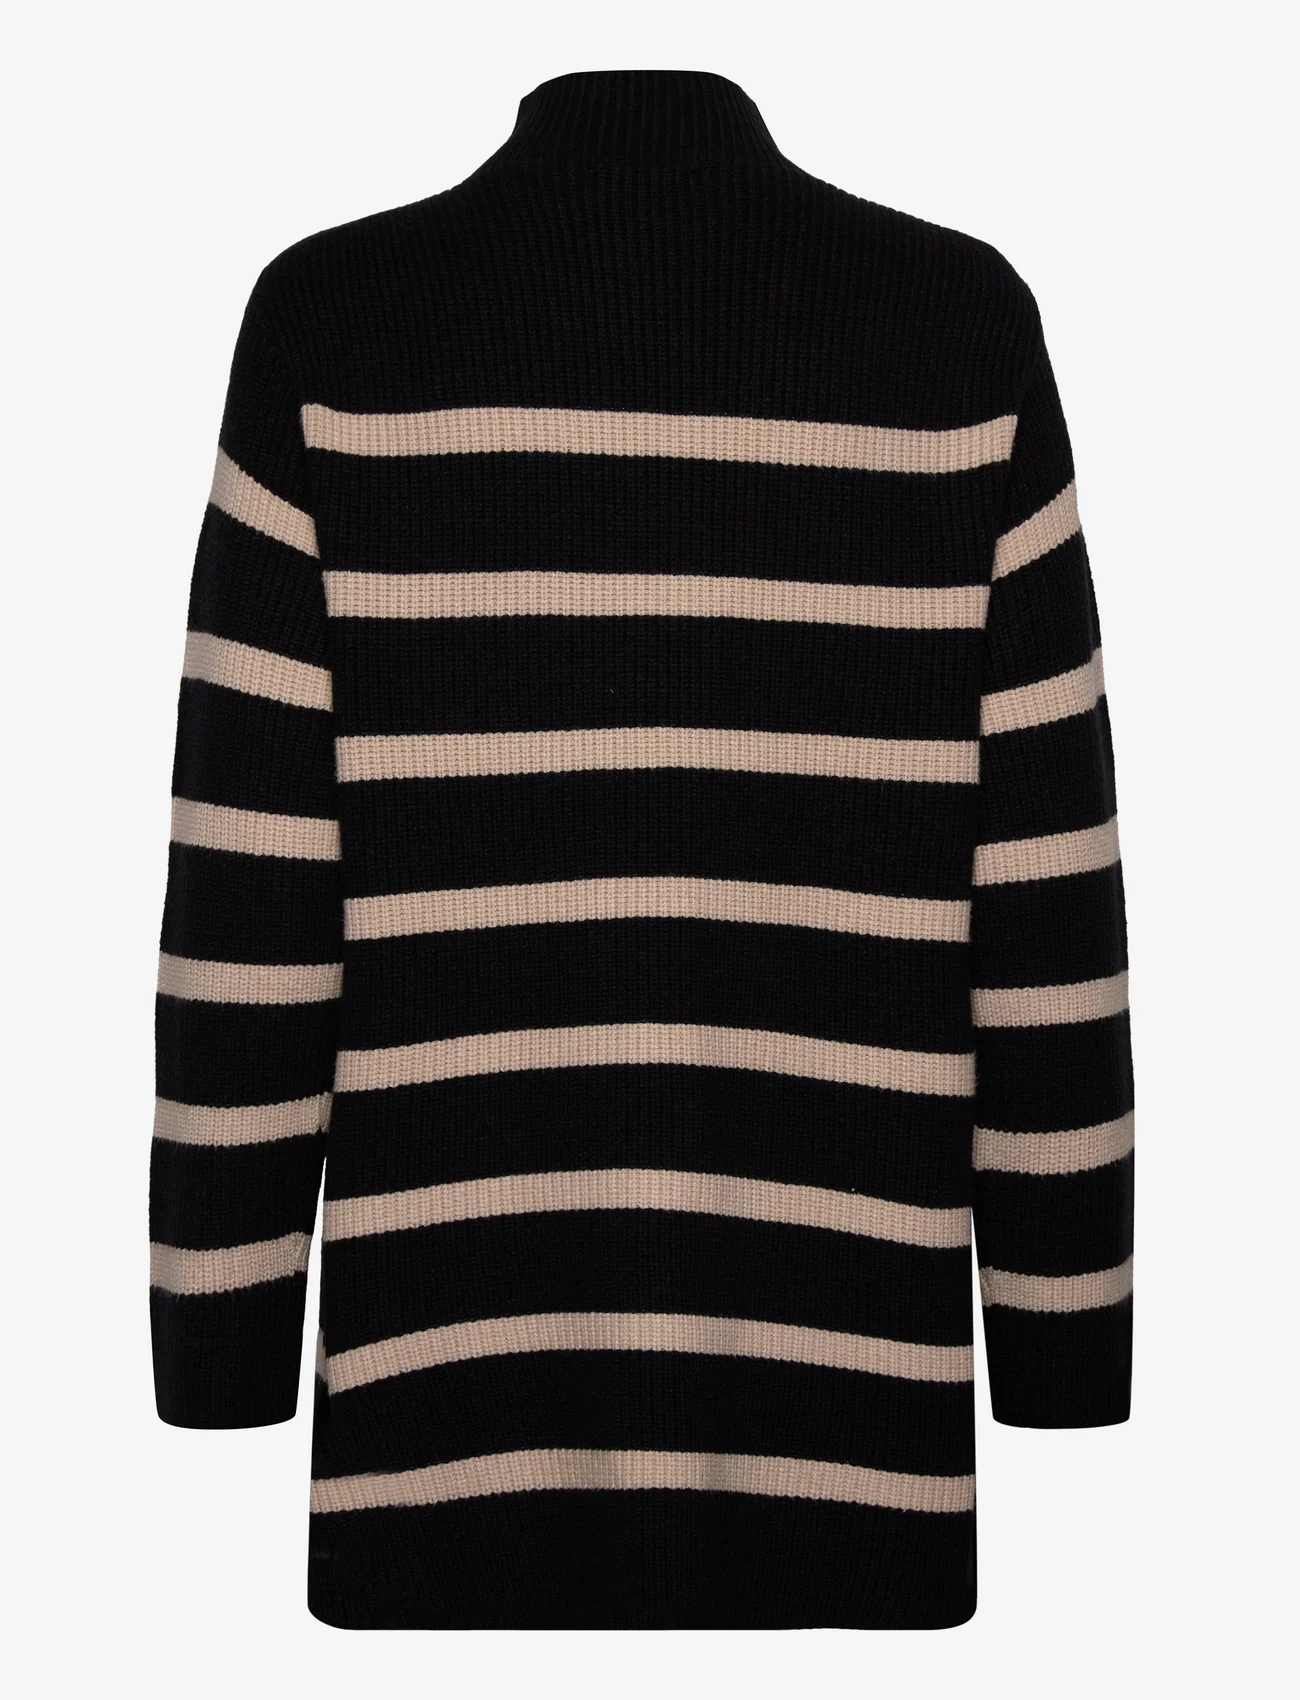 bzr - DaytonaBZKylie knit - polotröjor - black w. sand stripe - 1